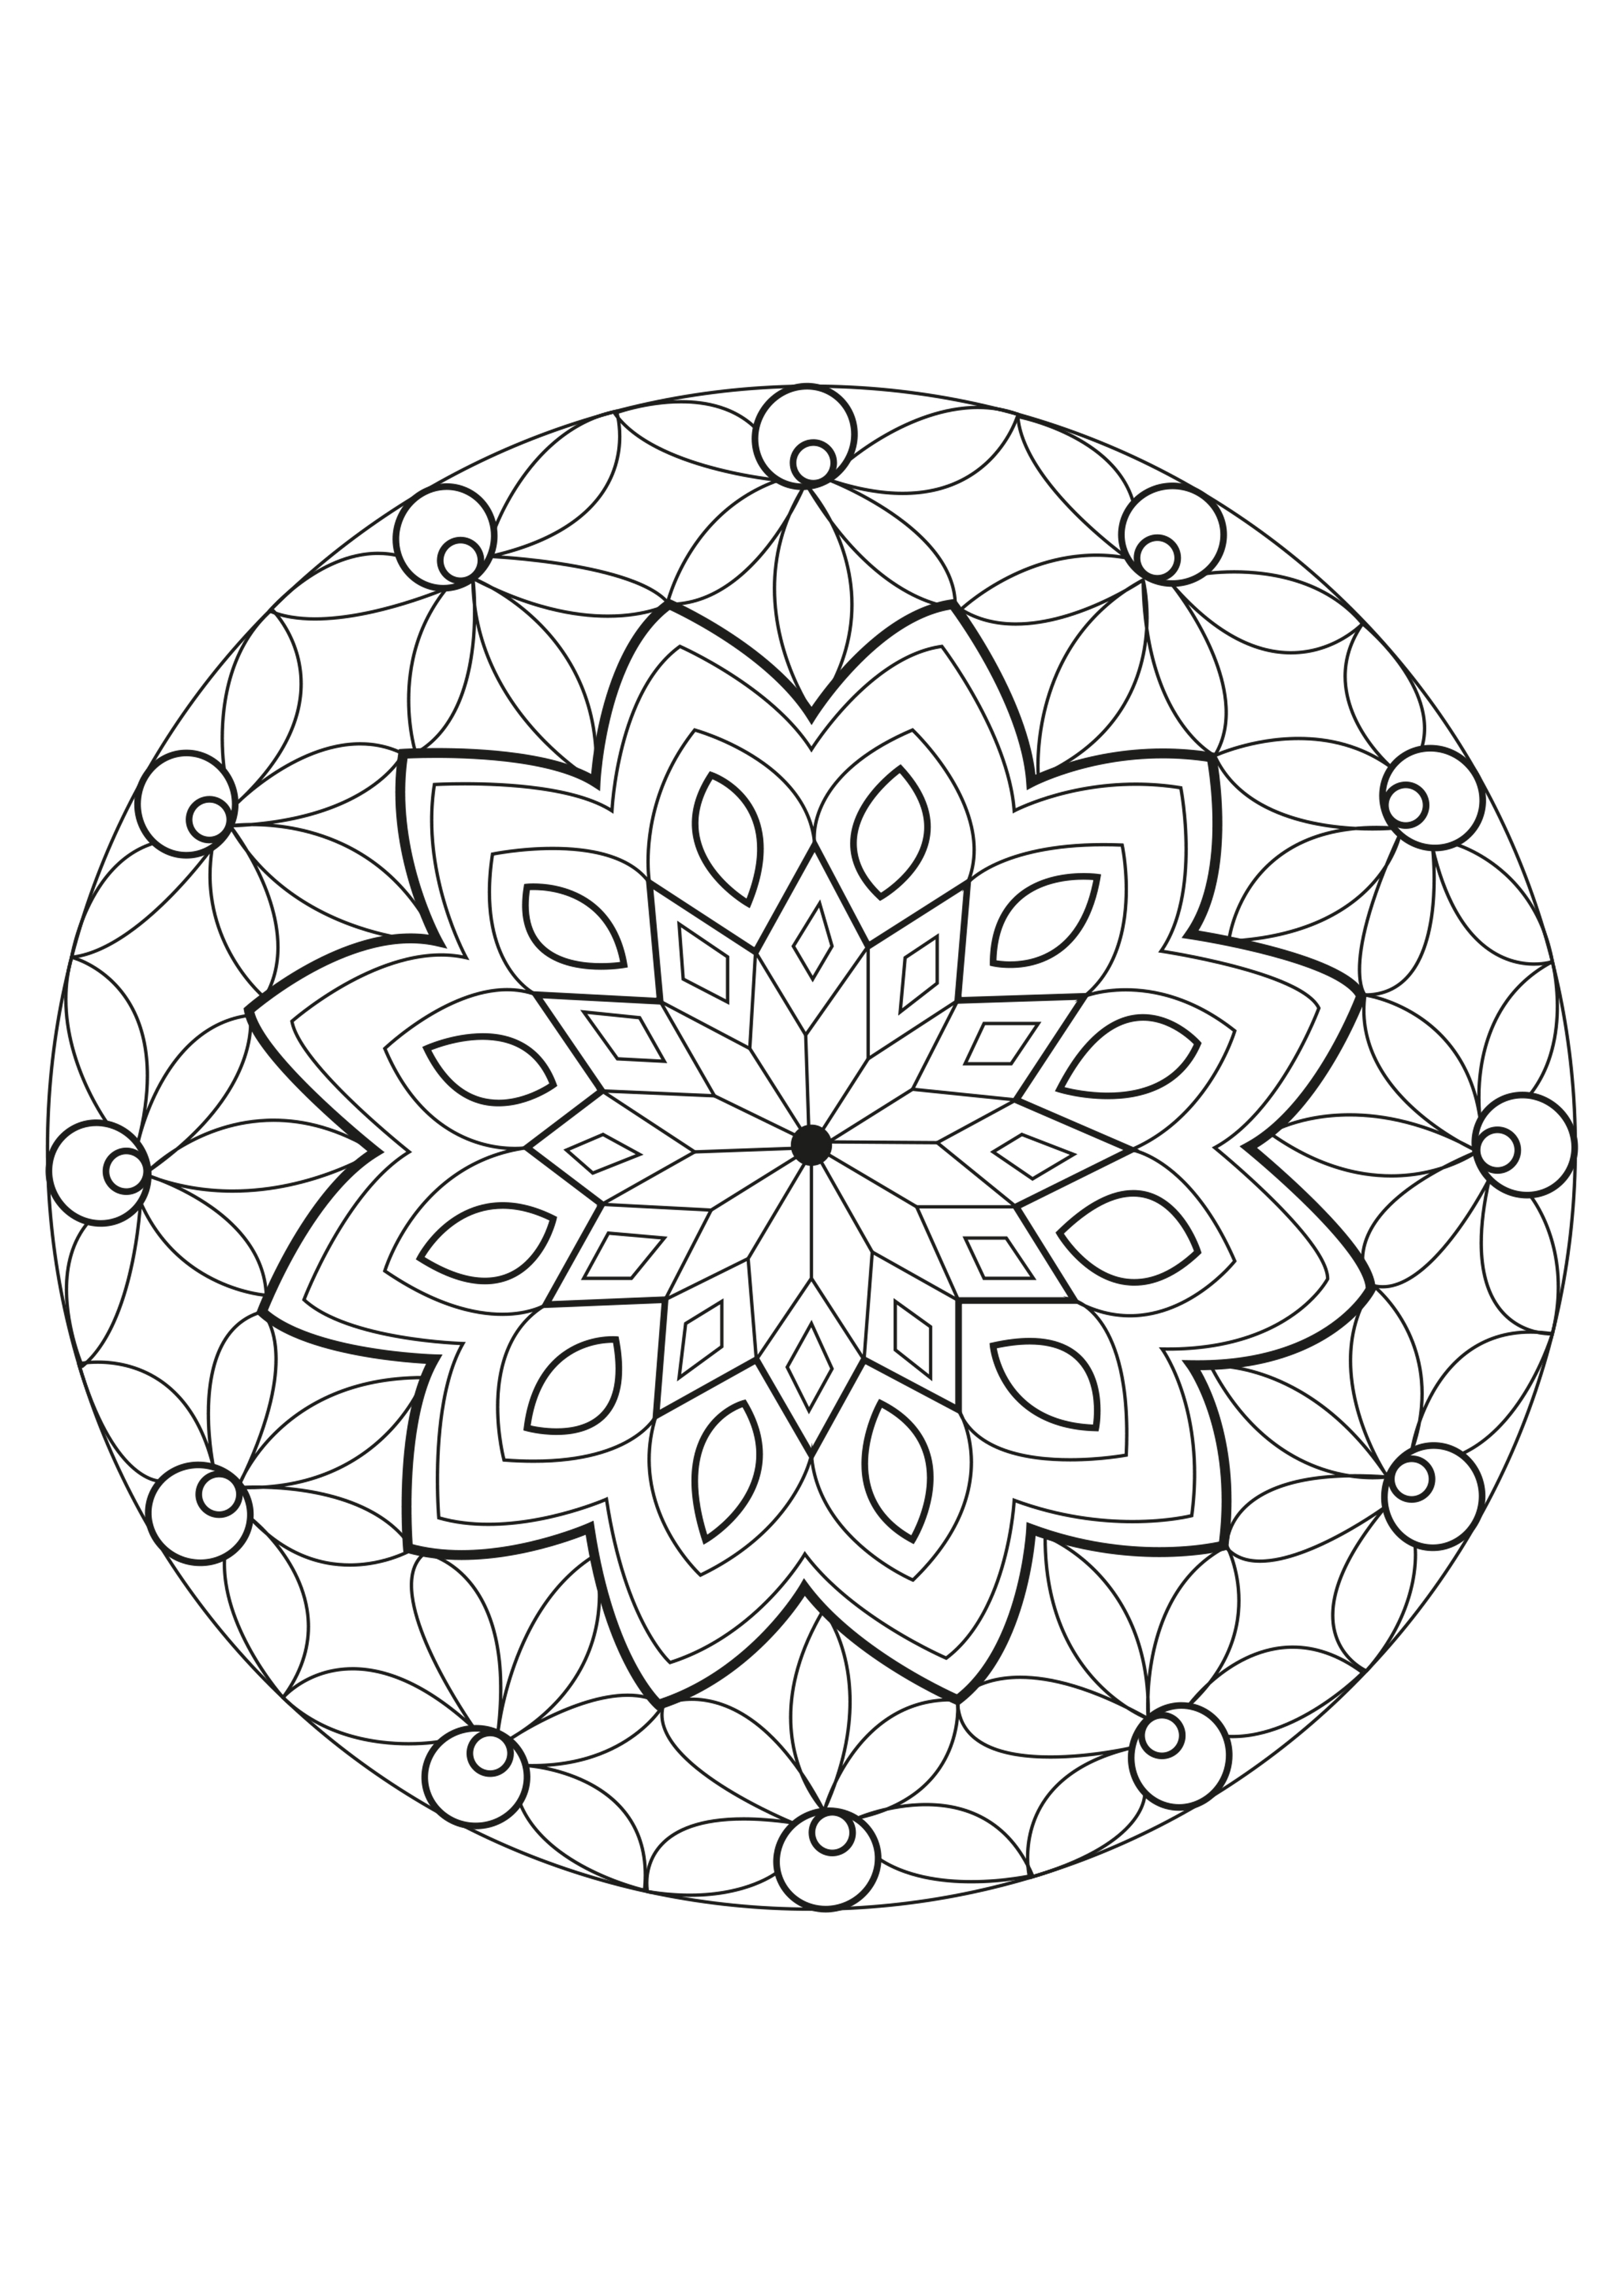 A special Mandala, made by Celine, Artist : Celine